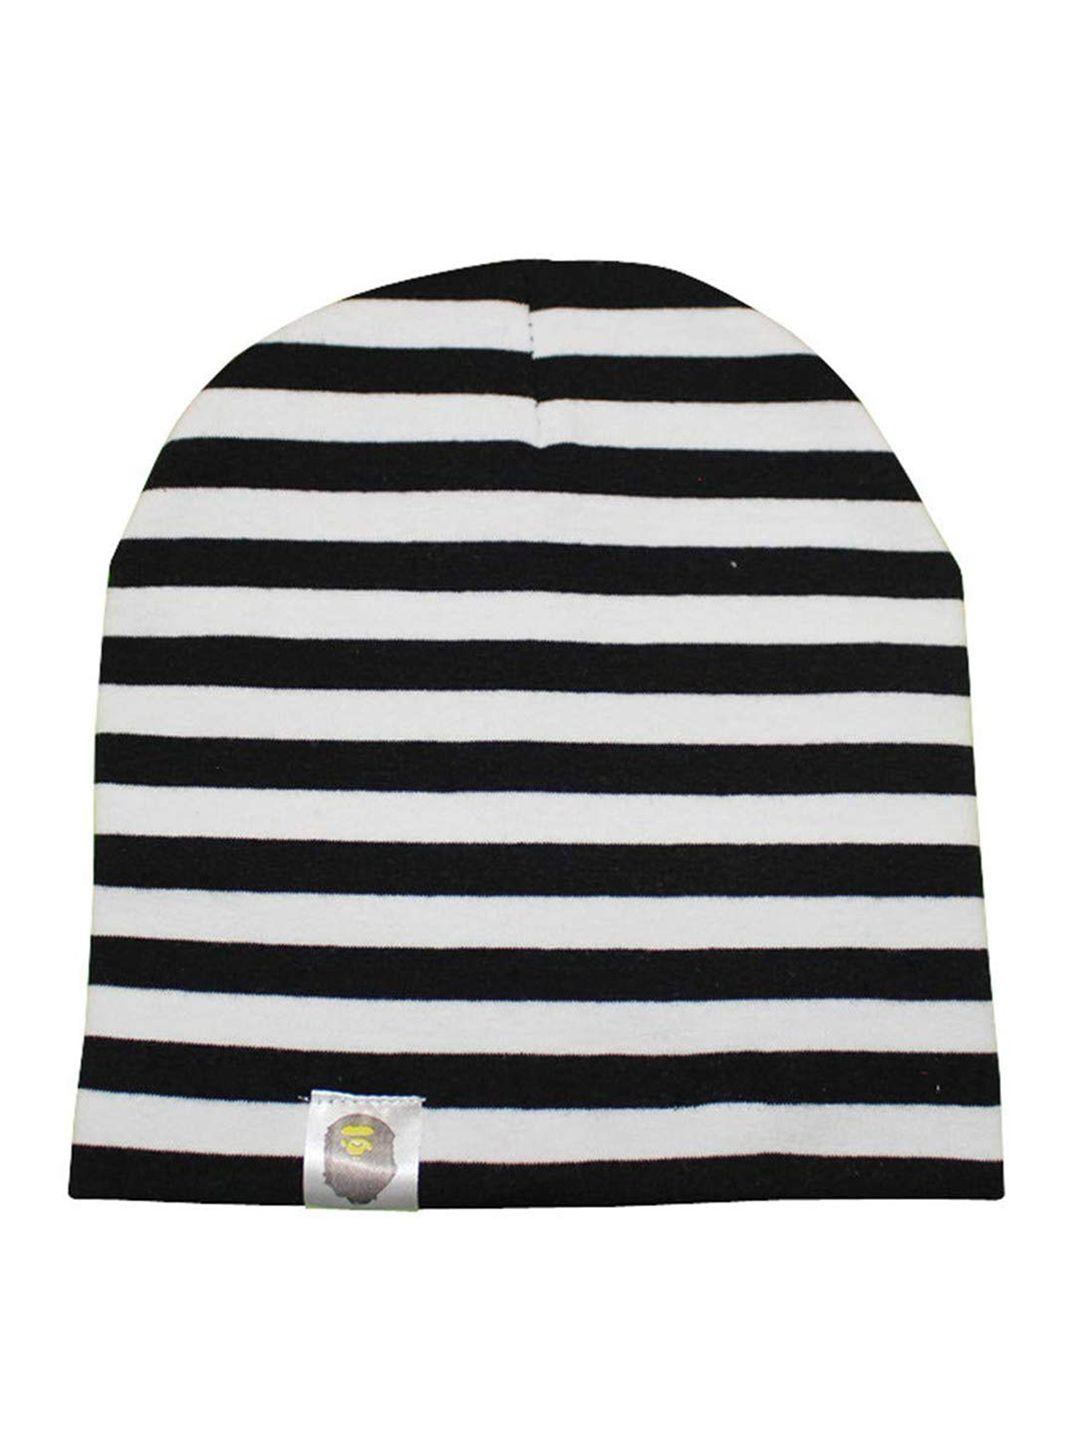 syga kids black & white striped beanie